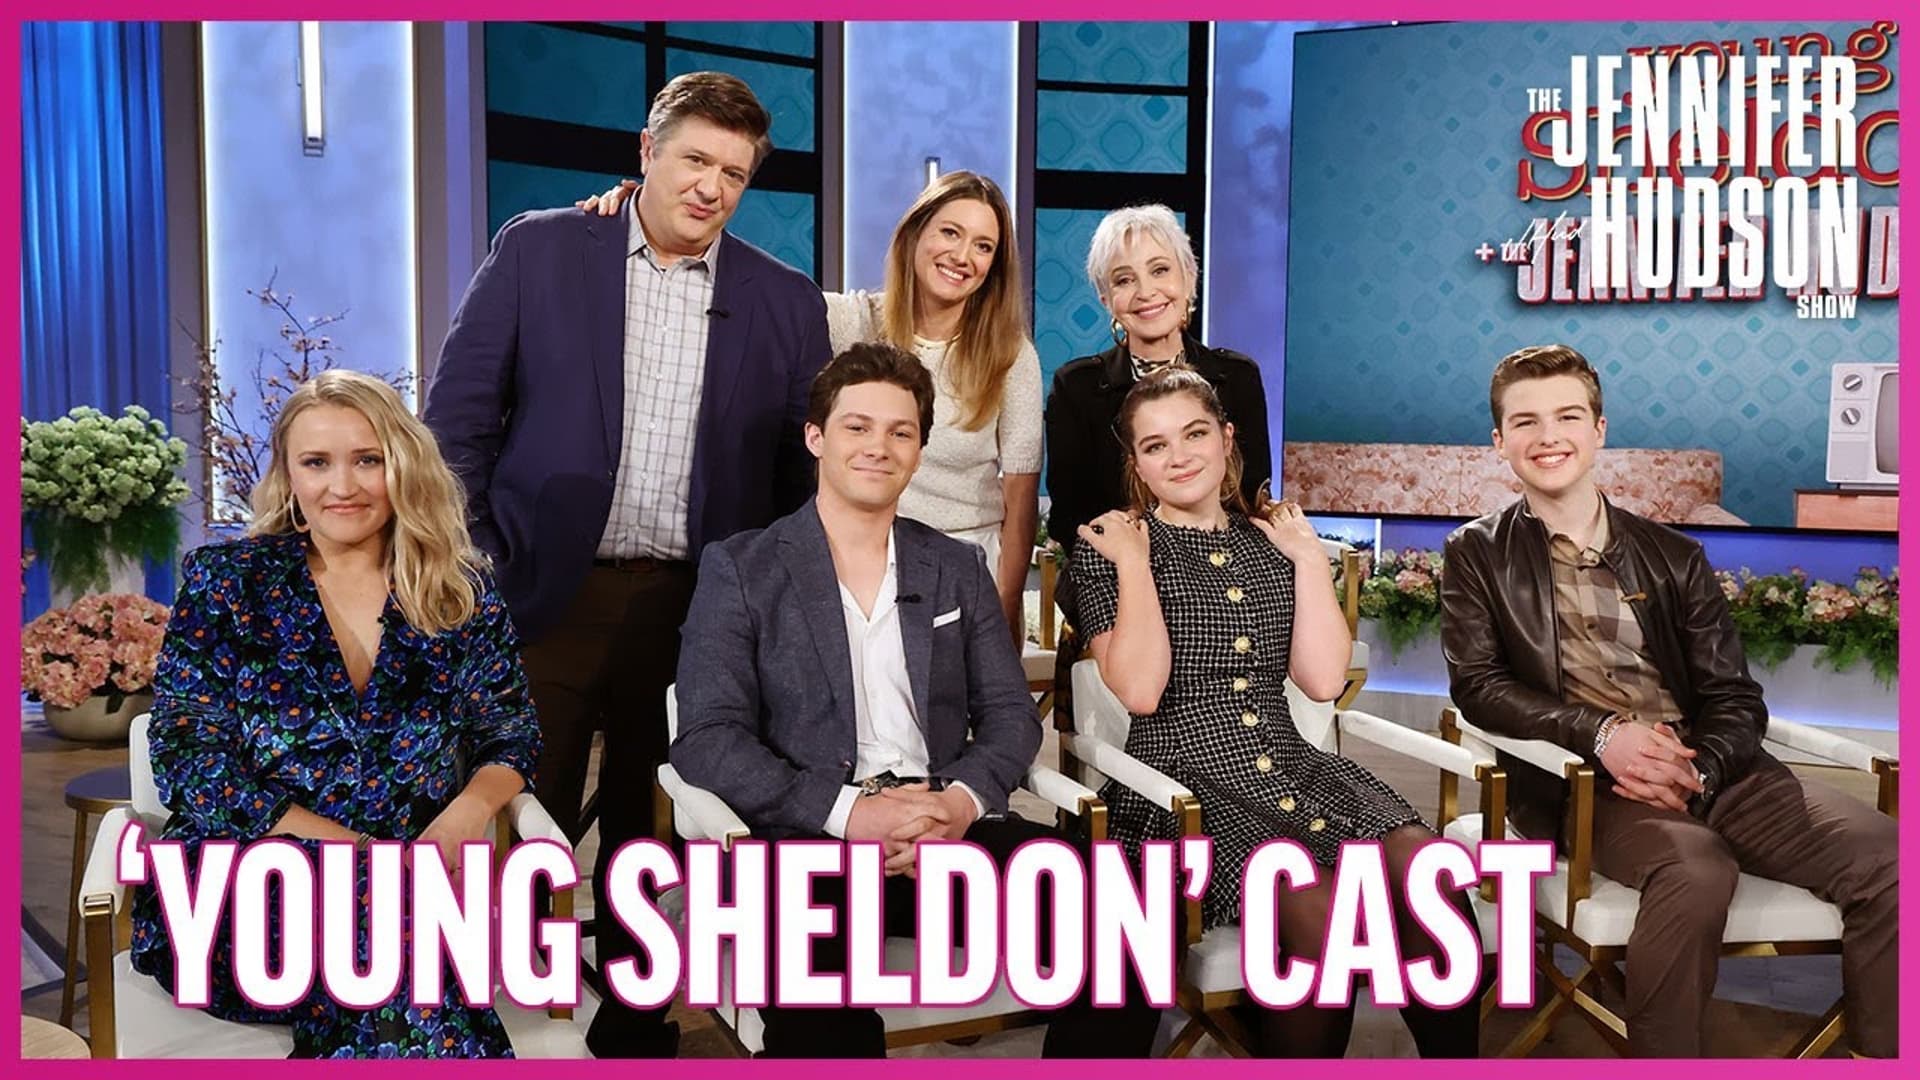 The Jennifer Hudson Show Season 2 :Episode 130  'Young Sheldon' Cast